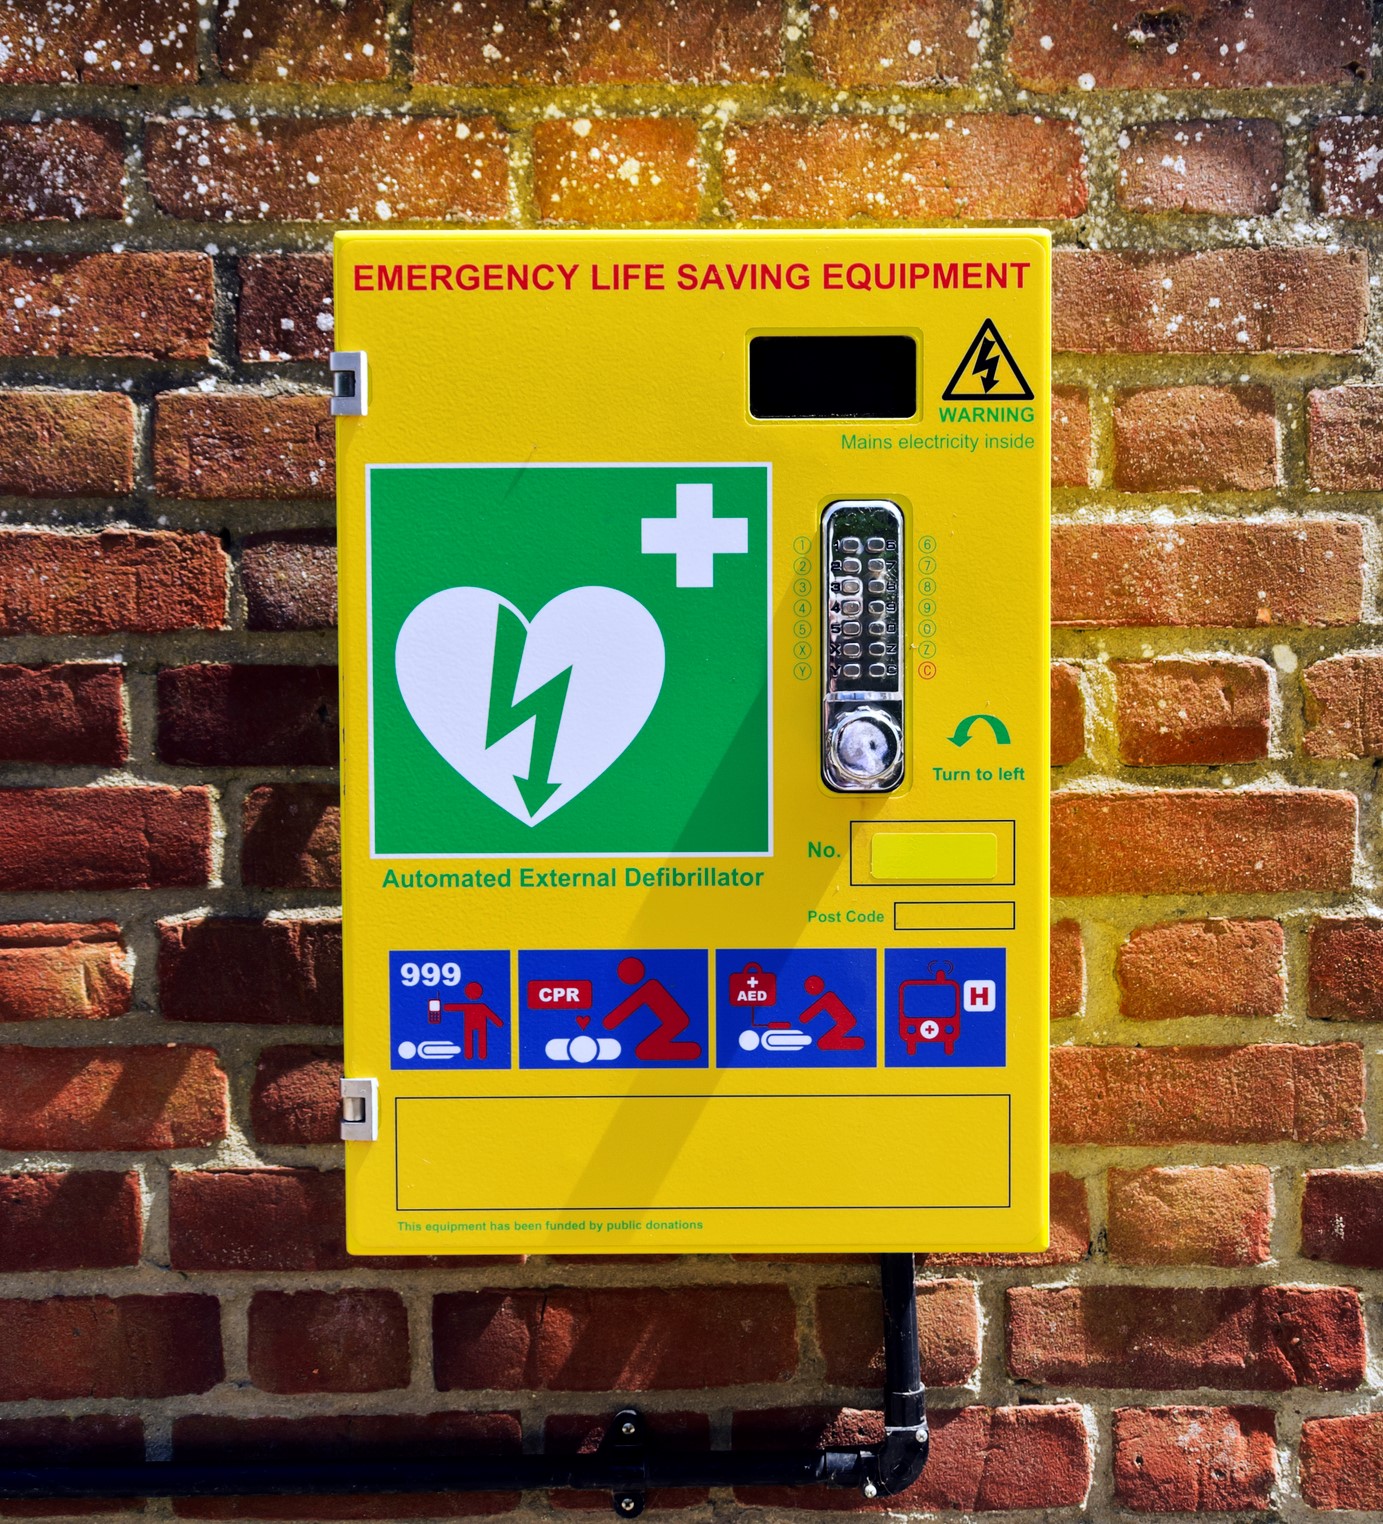 Defibrillator in case of emergency,